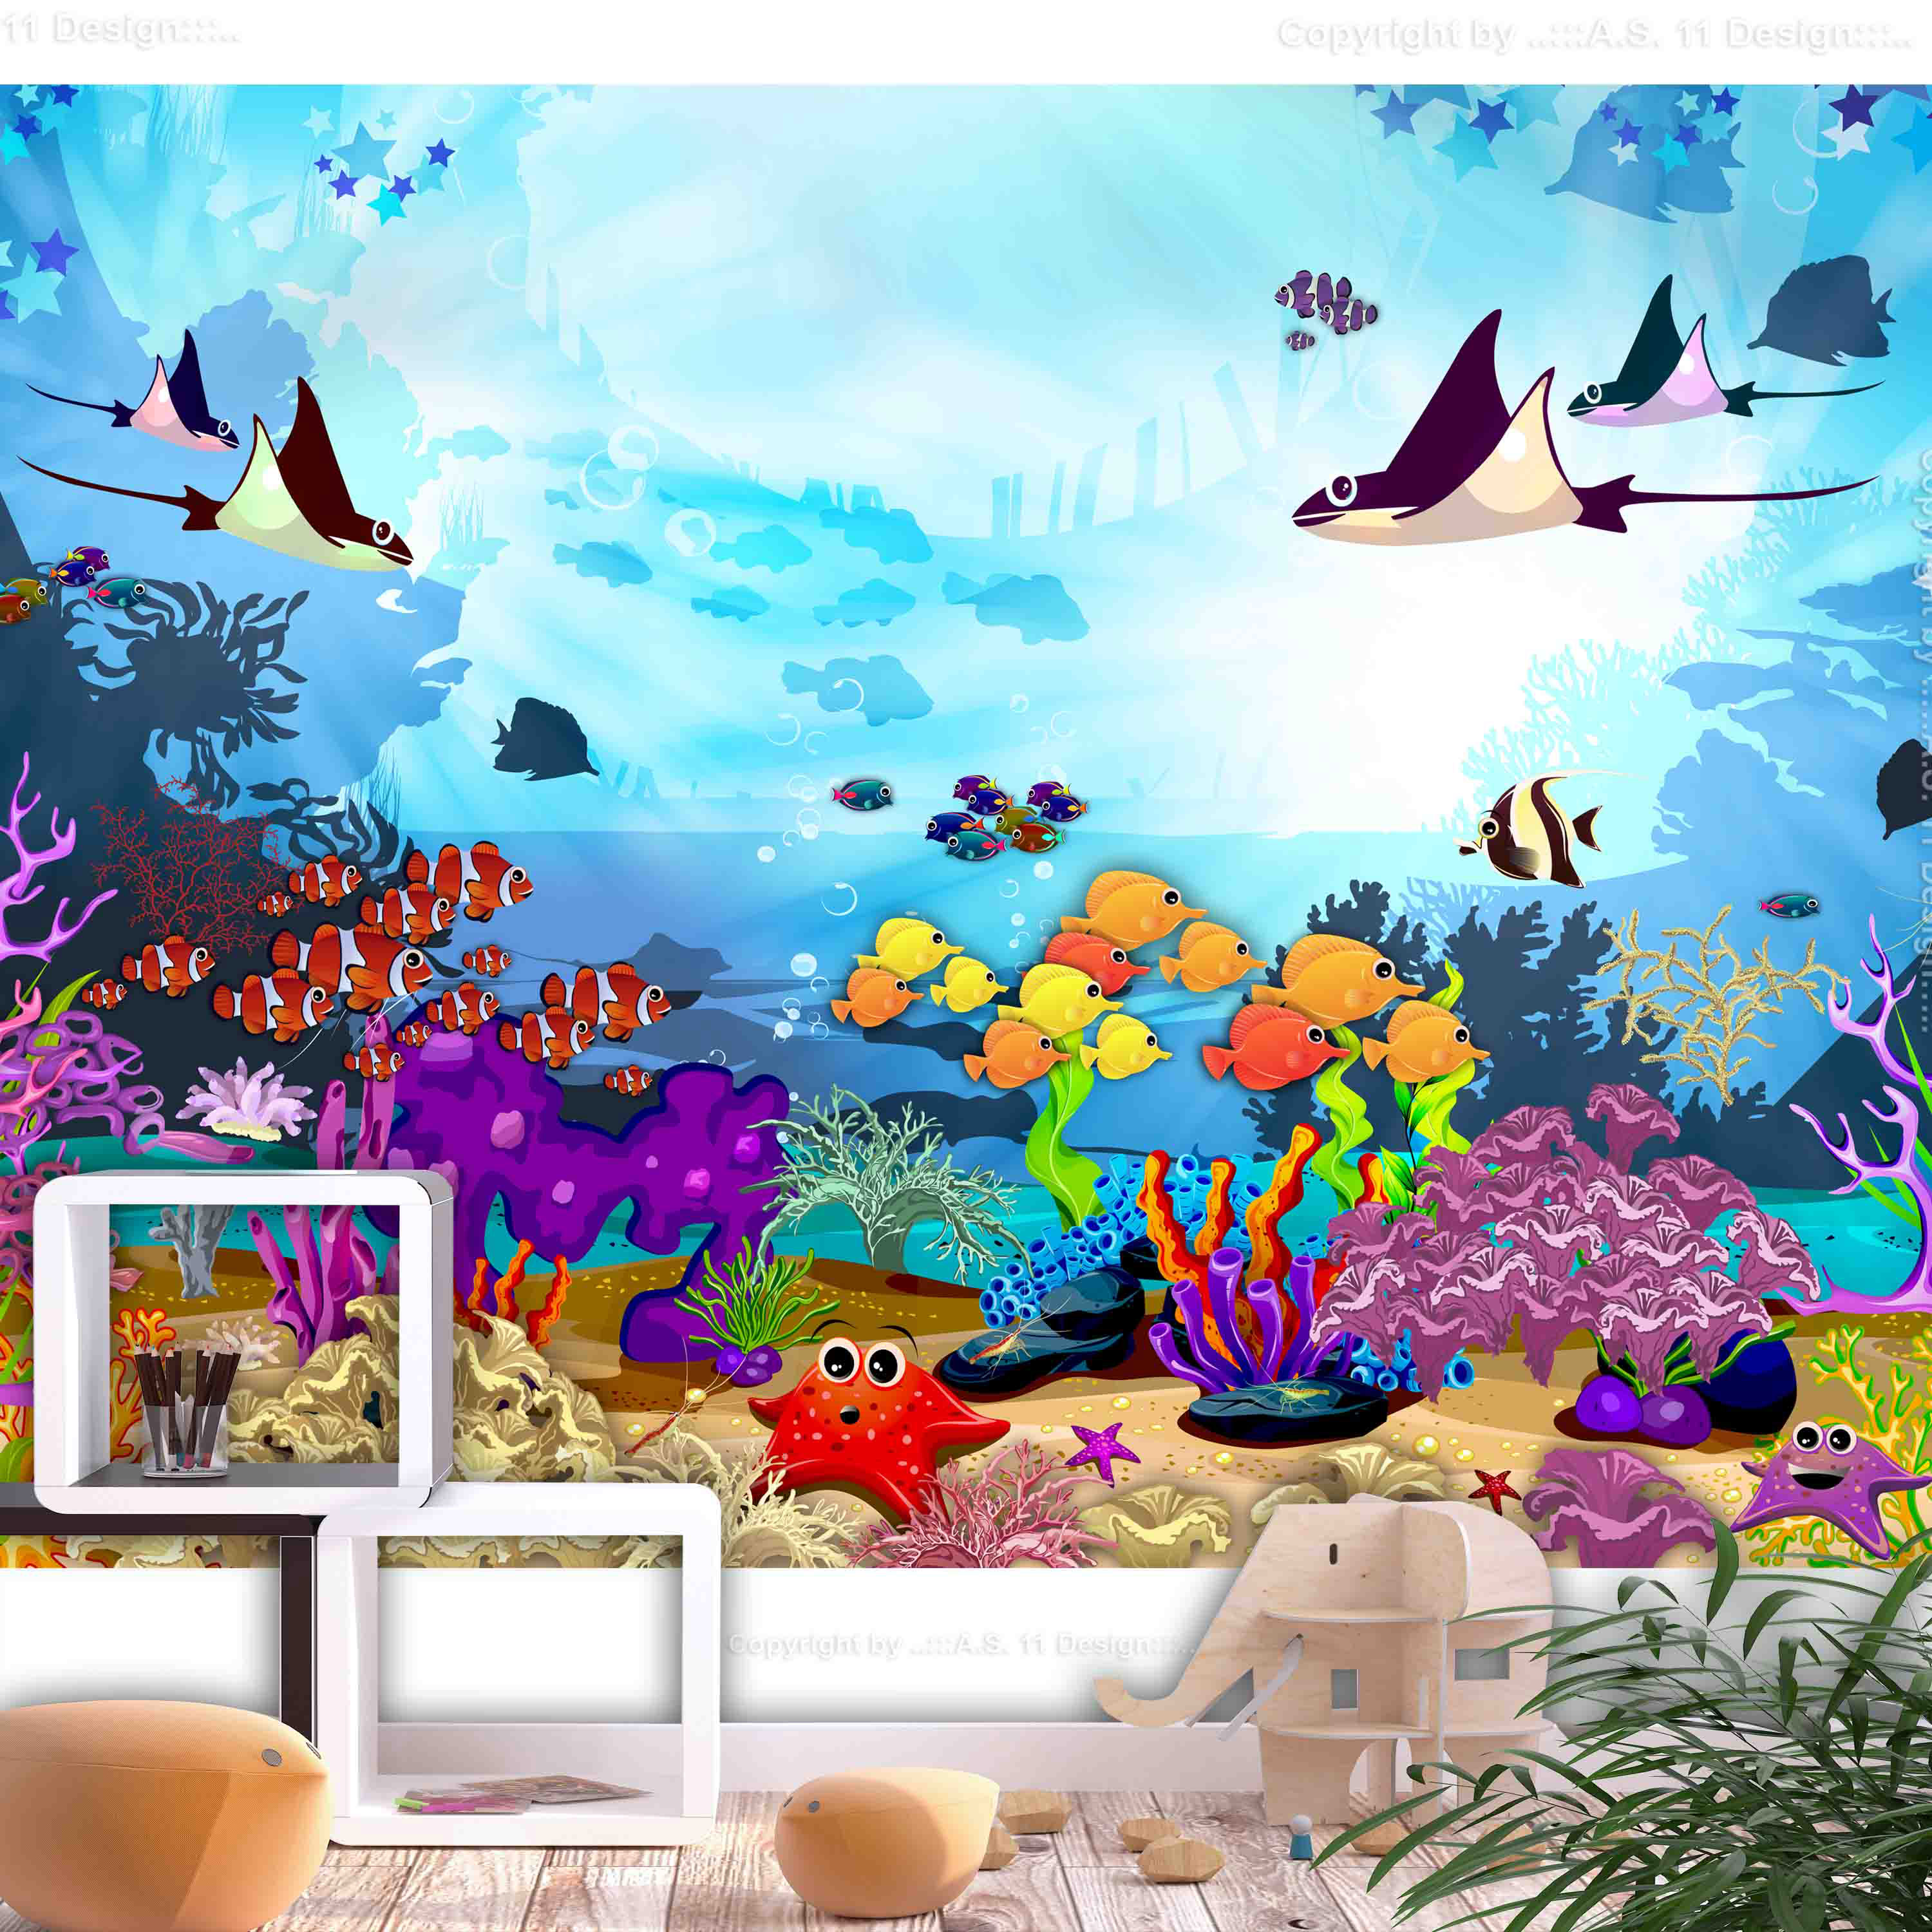 Self-adhesive Wallpaper - Underwater Fun - 441x315